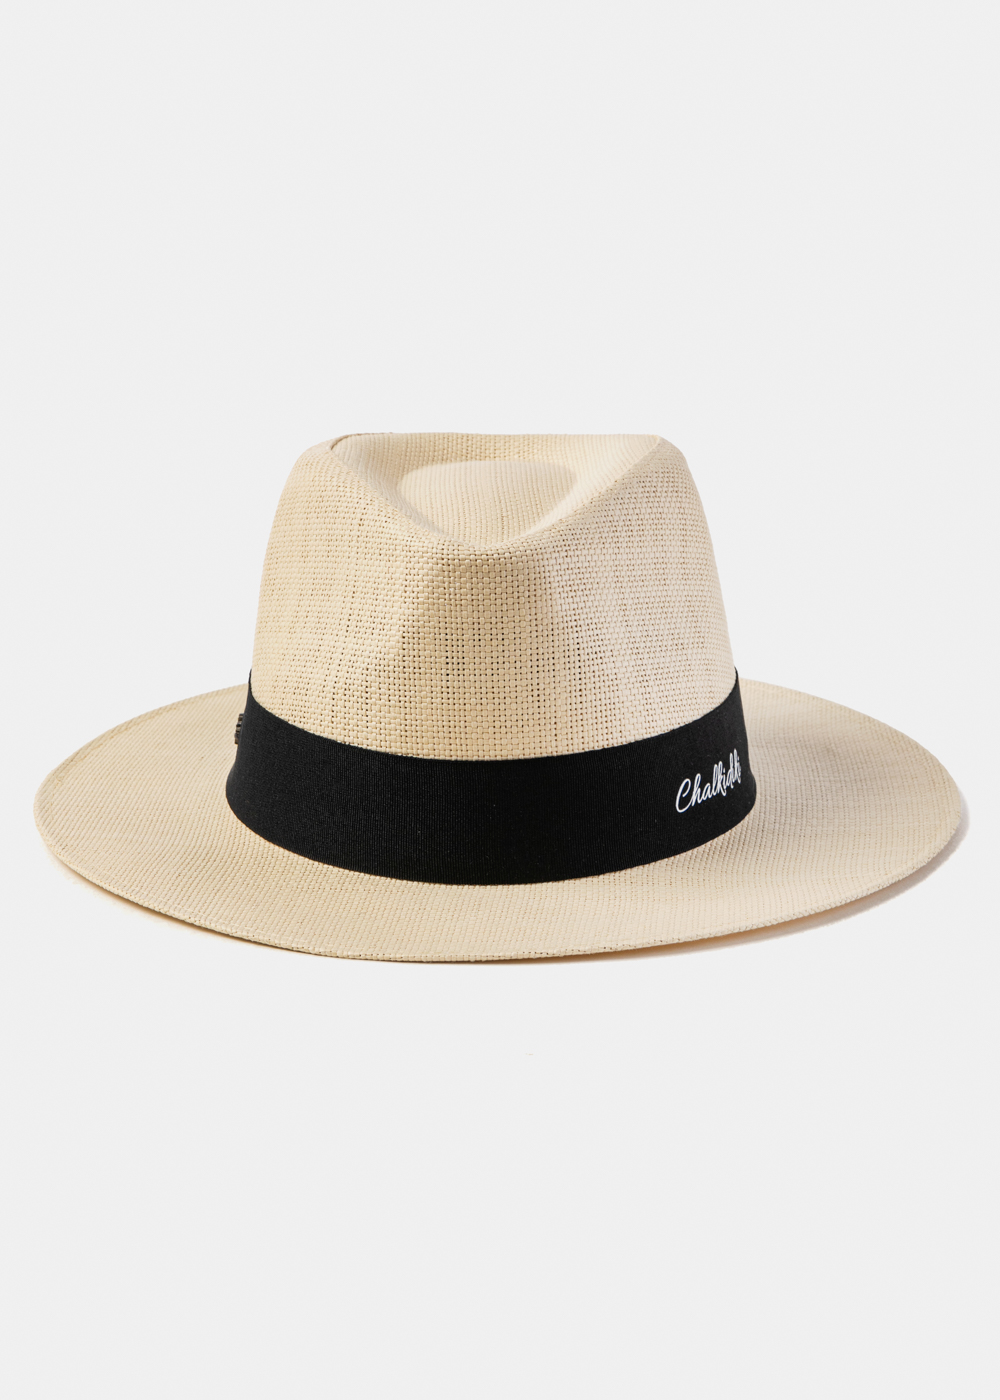 Beige "Chalkidiki" Panama Hat